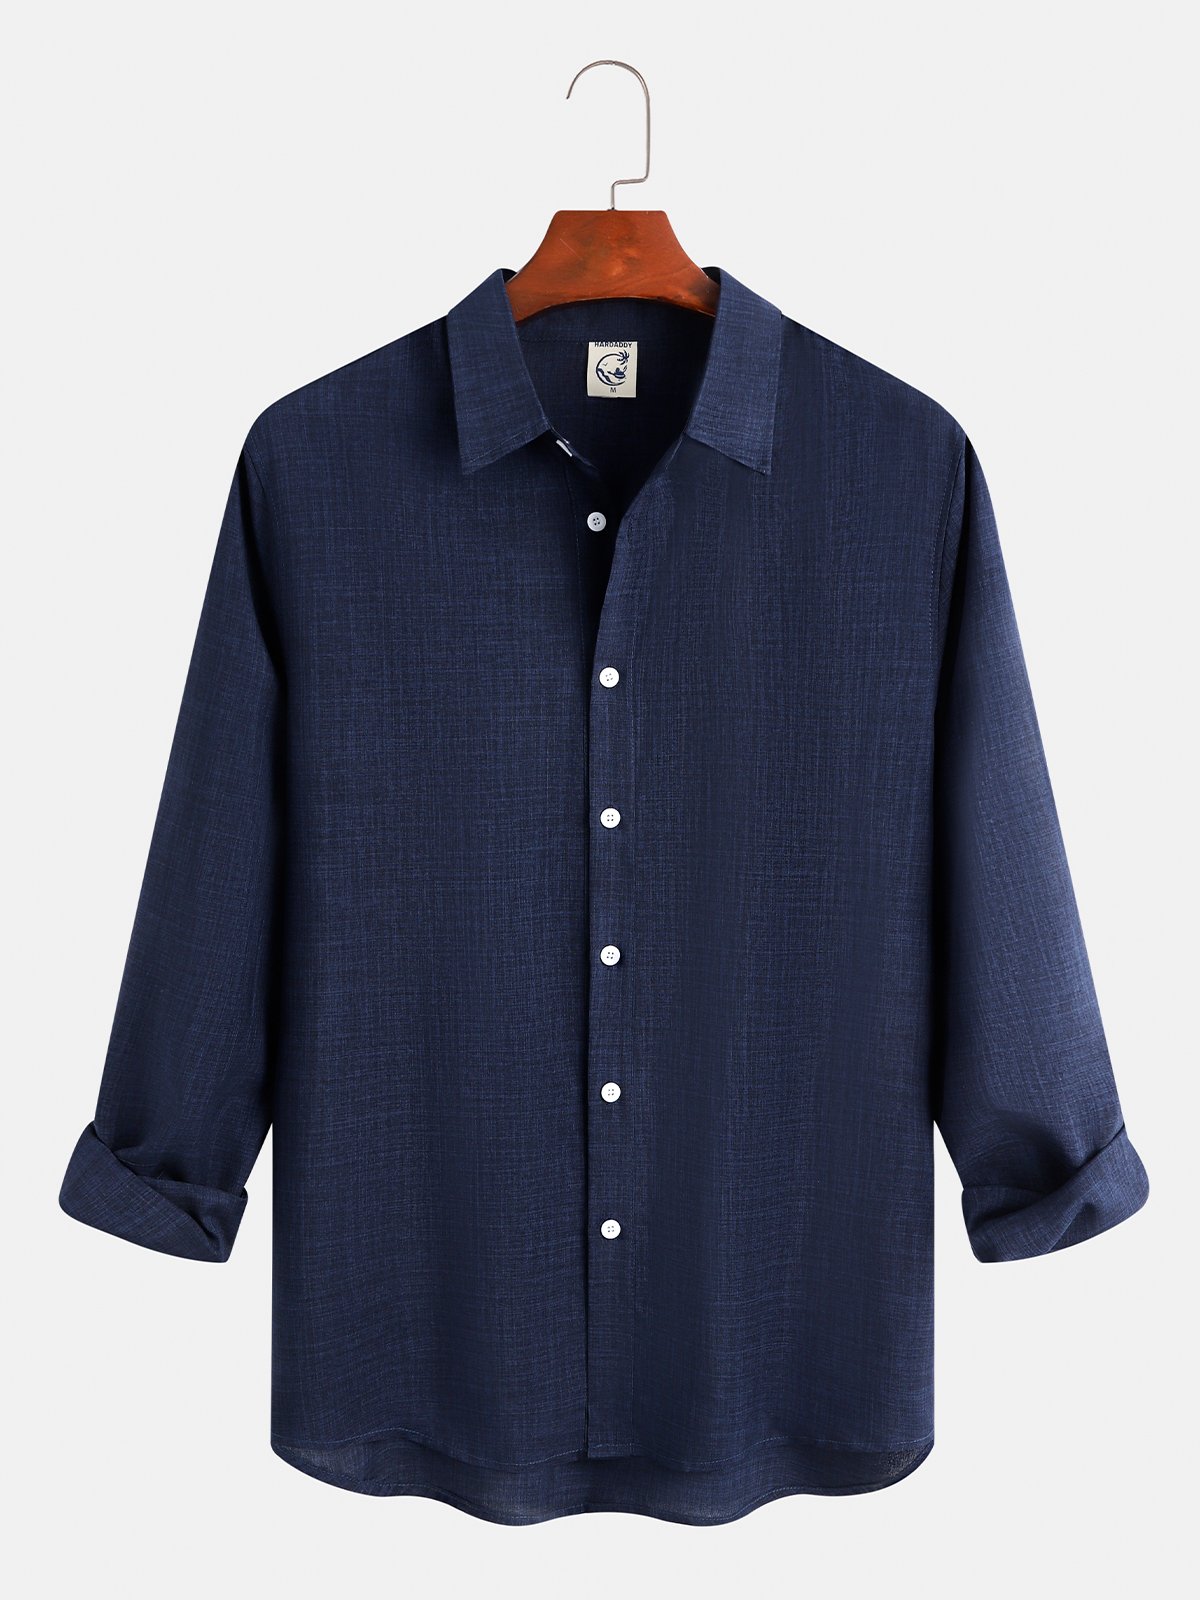 Hardaddy Cotton Long Sleeve Shirt